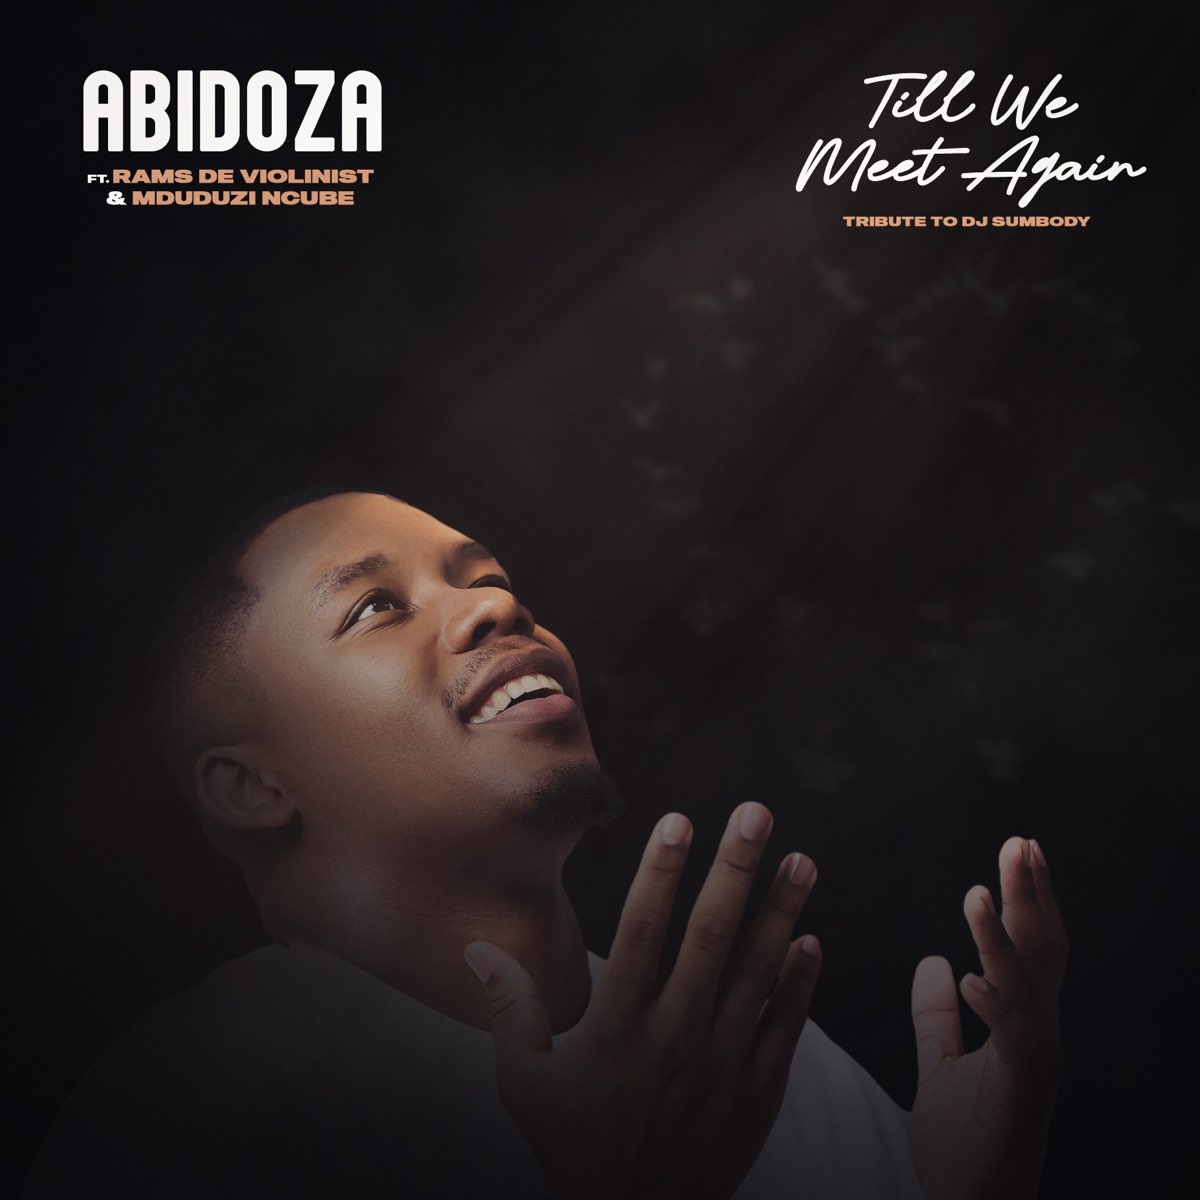 Till We Meet again (Tribute to DJ Sumbody) (Ft Rams De Violinist & Mduduzi Ncube)